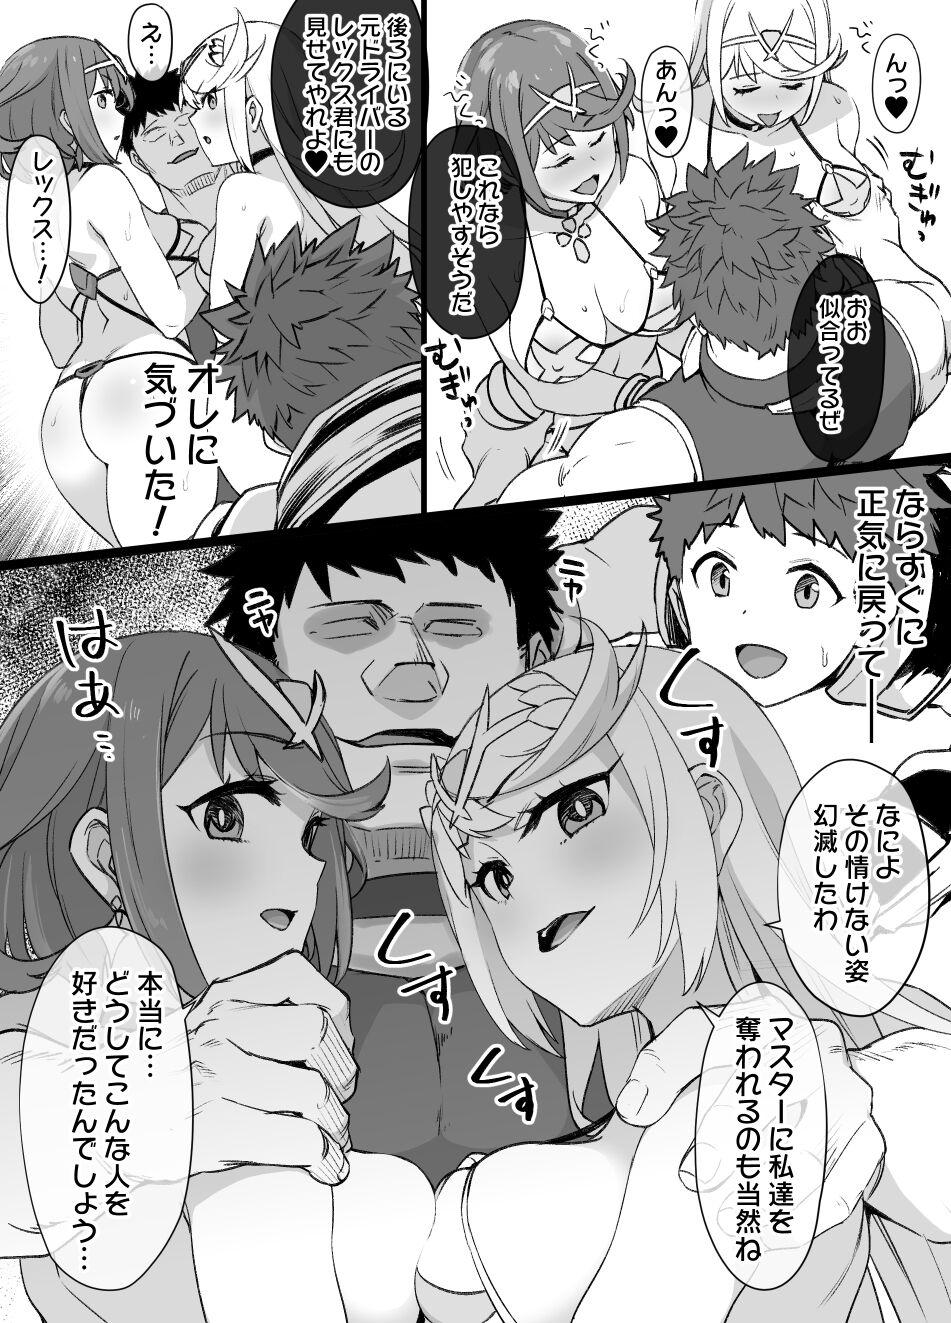 Pawg Homura & Hikari Sennou NTR Manga 14P - Xenoblade chronicles 2 Butt Plug - Page 5